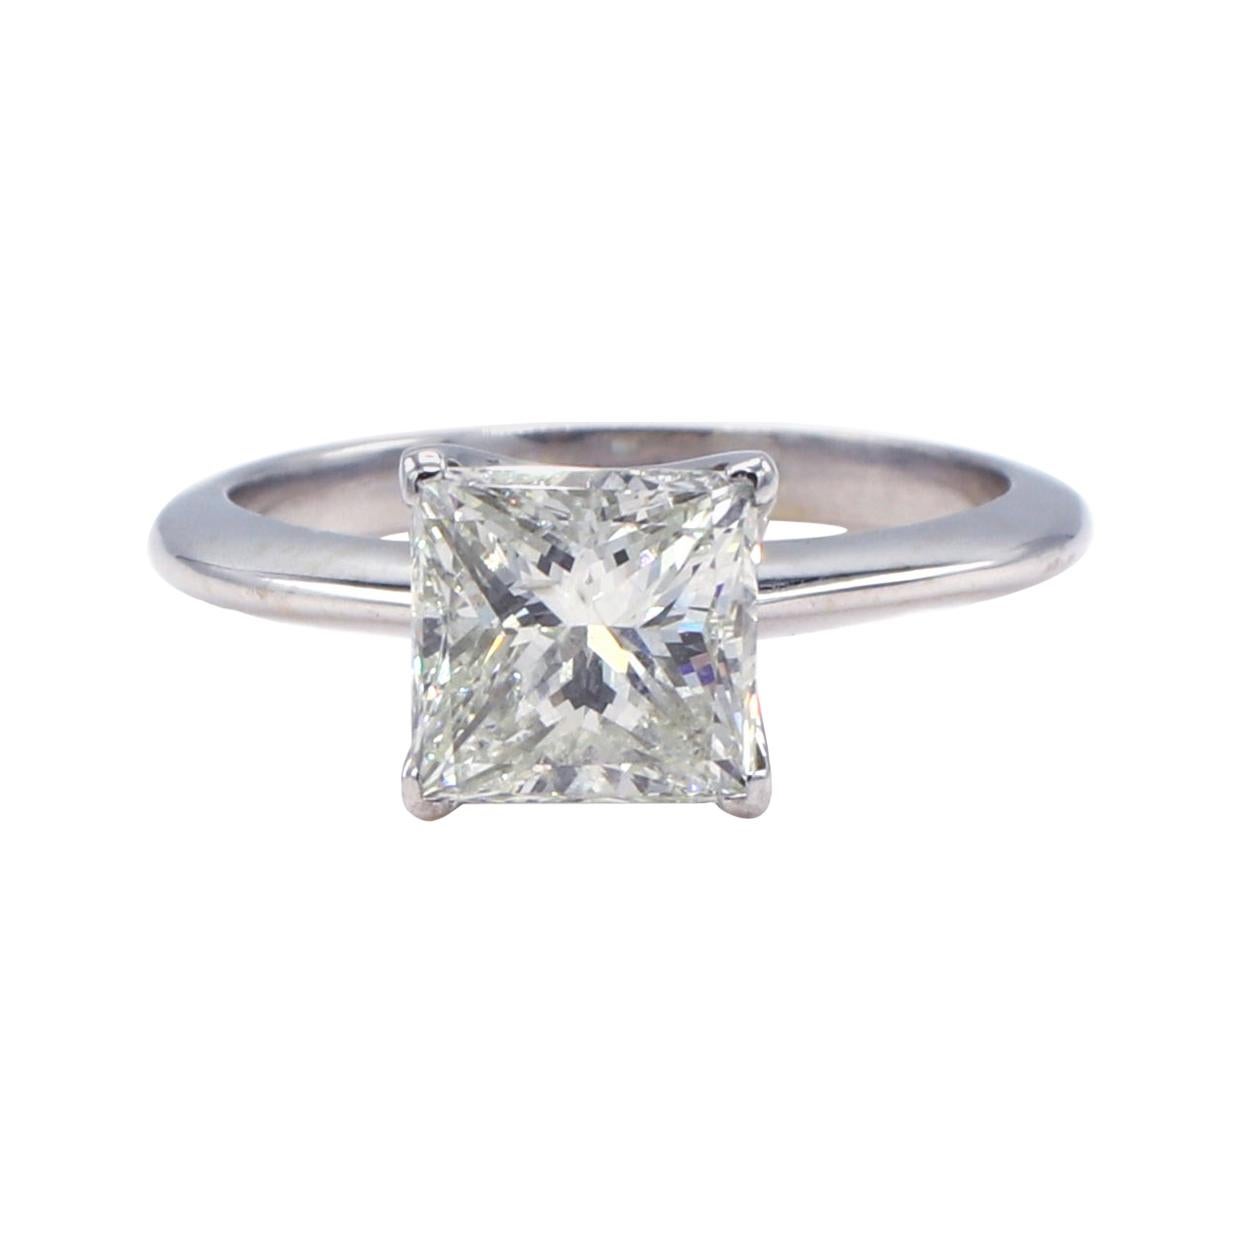 GIA Certified 1.93 Carat Princess Cut Diamond Solitaire Engagement Ring